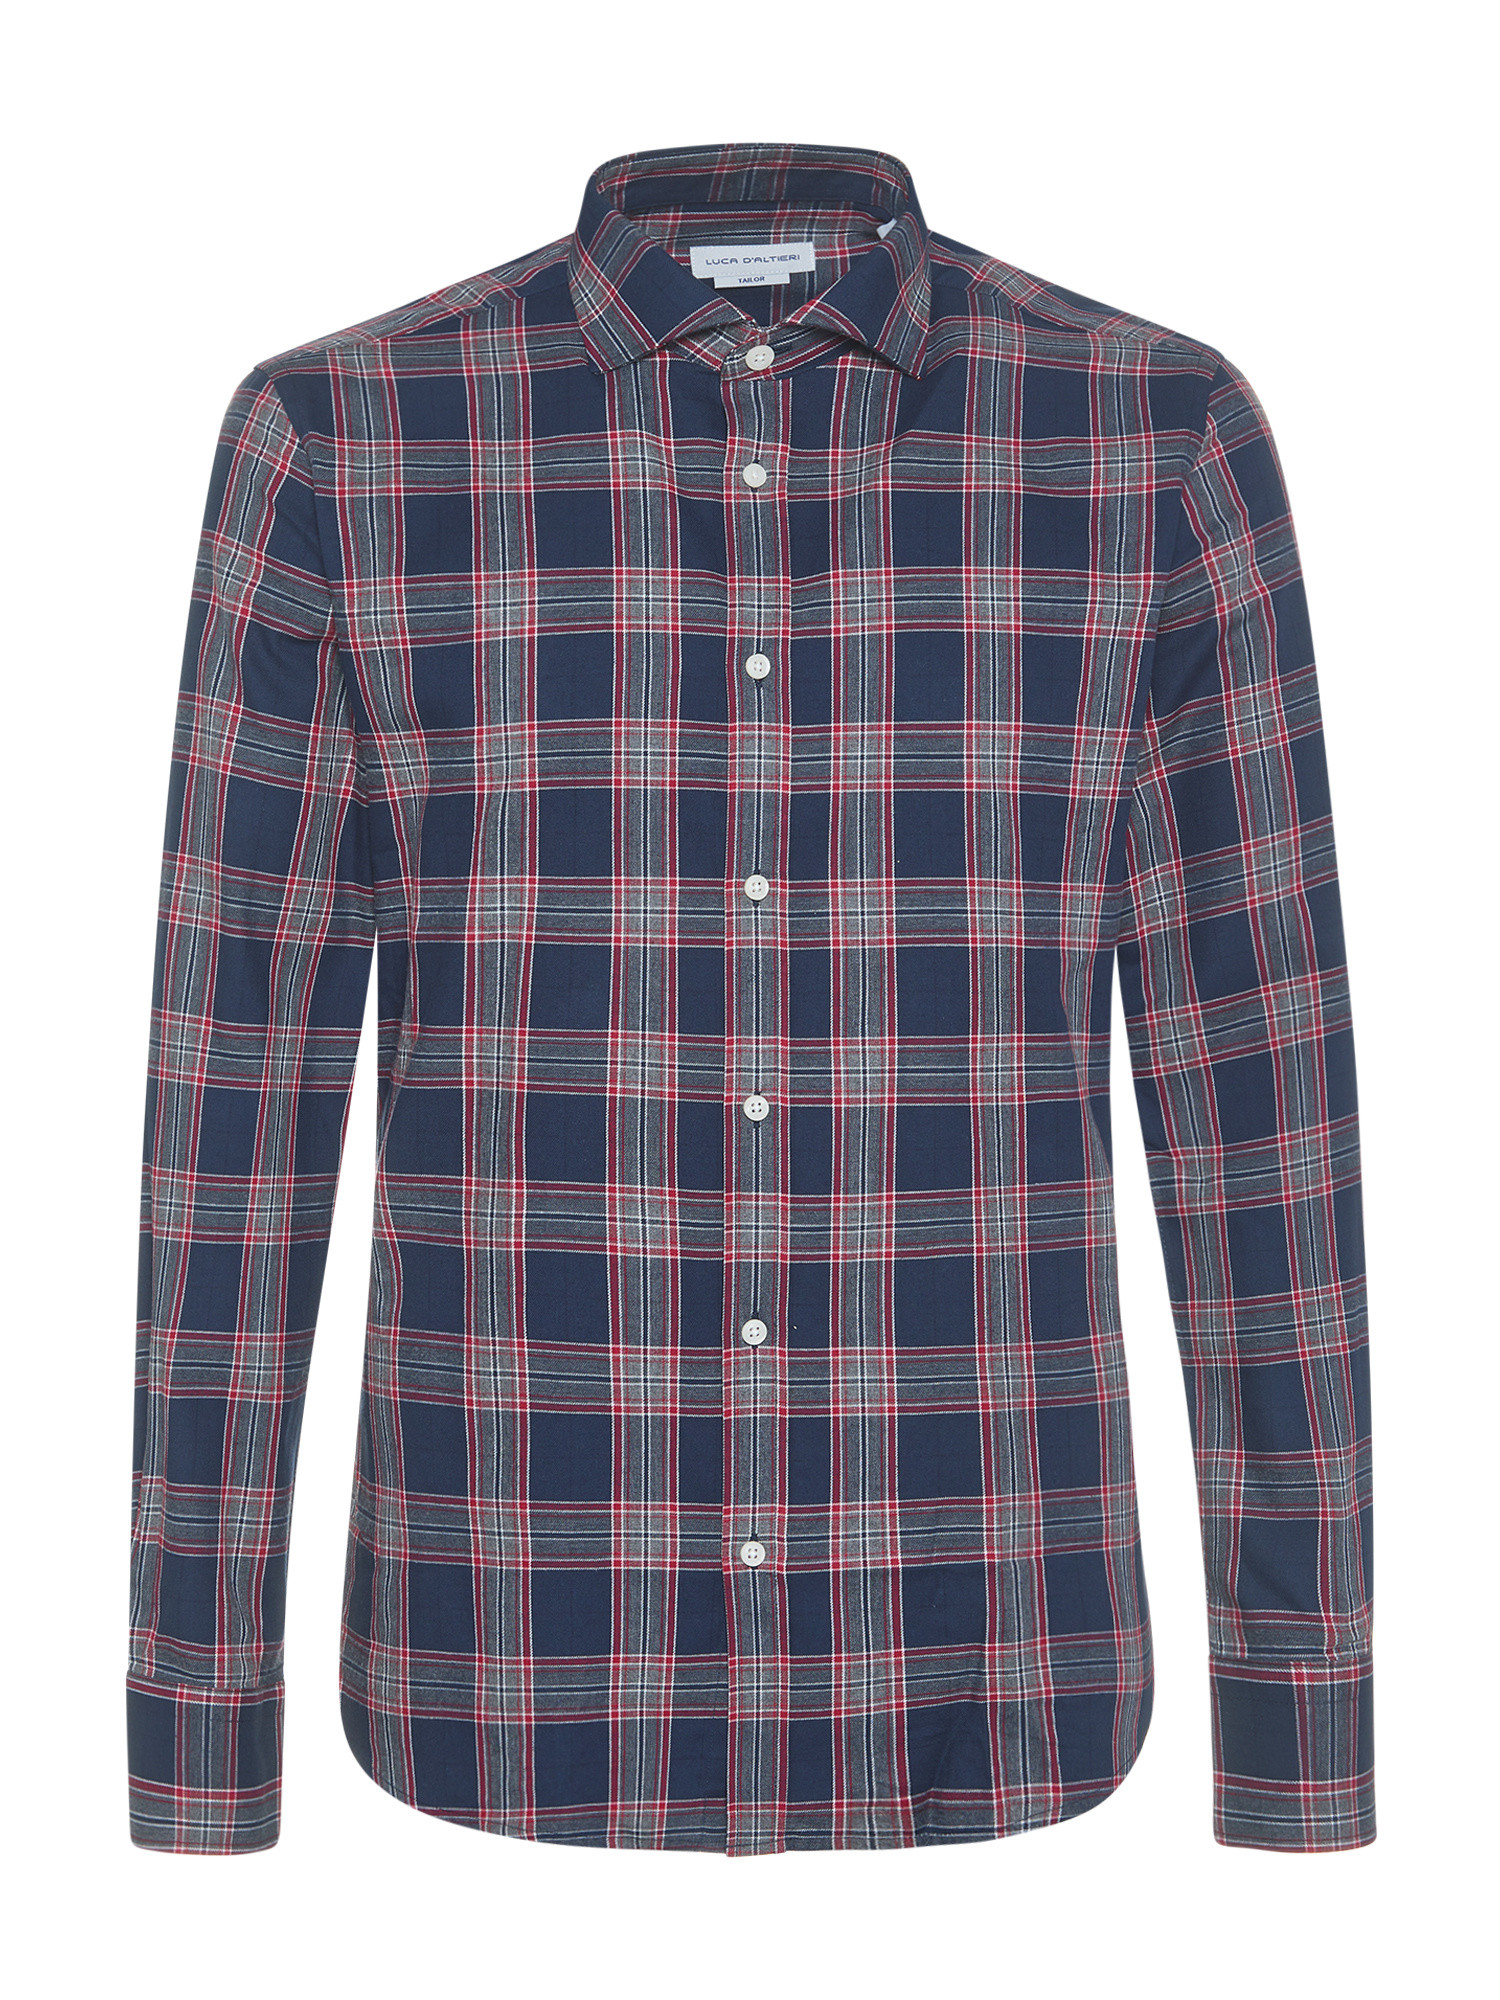 Luca D'Altieri - Tailor fit shirt in pure cotton flannel, Blue, large image number 0